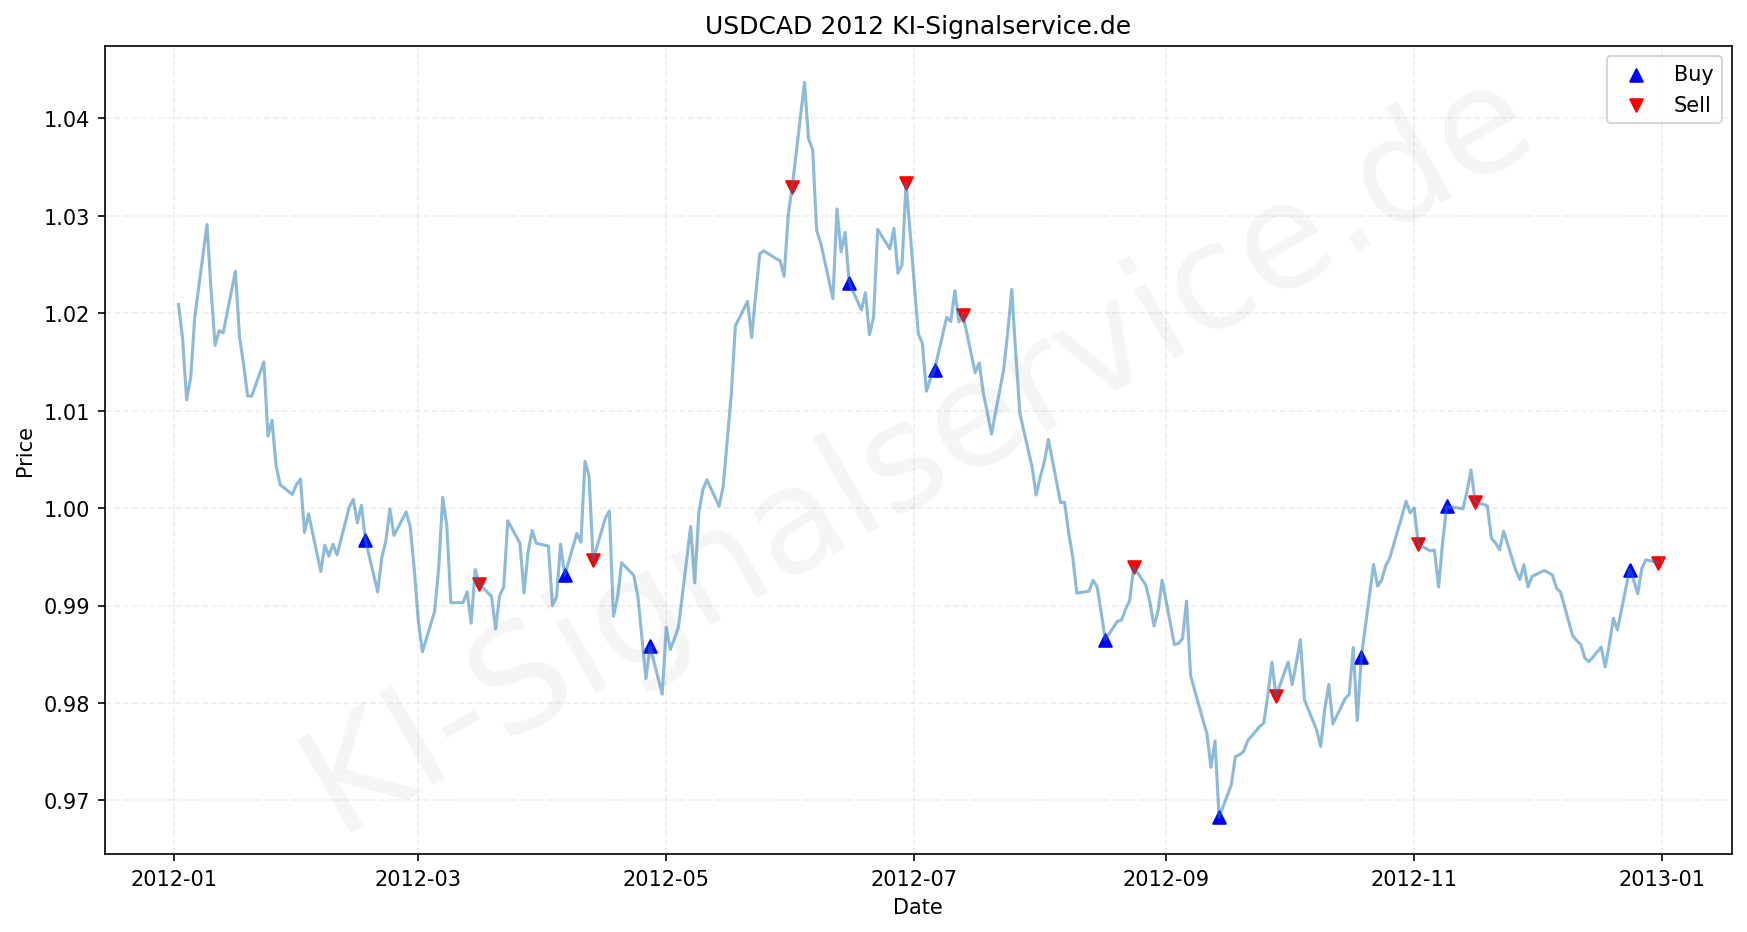 USDCAD Chart - KI Tradingsignale 2012